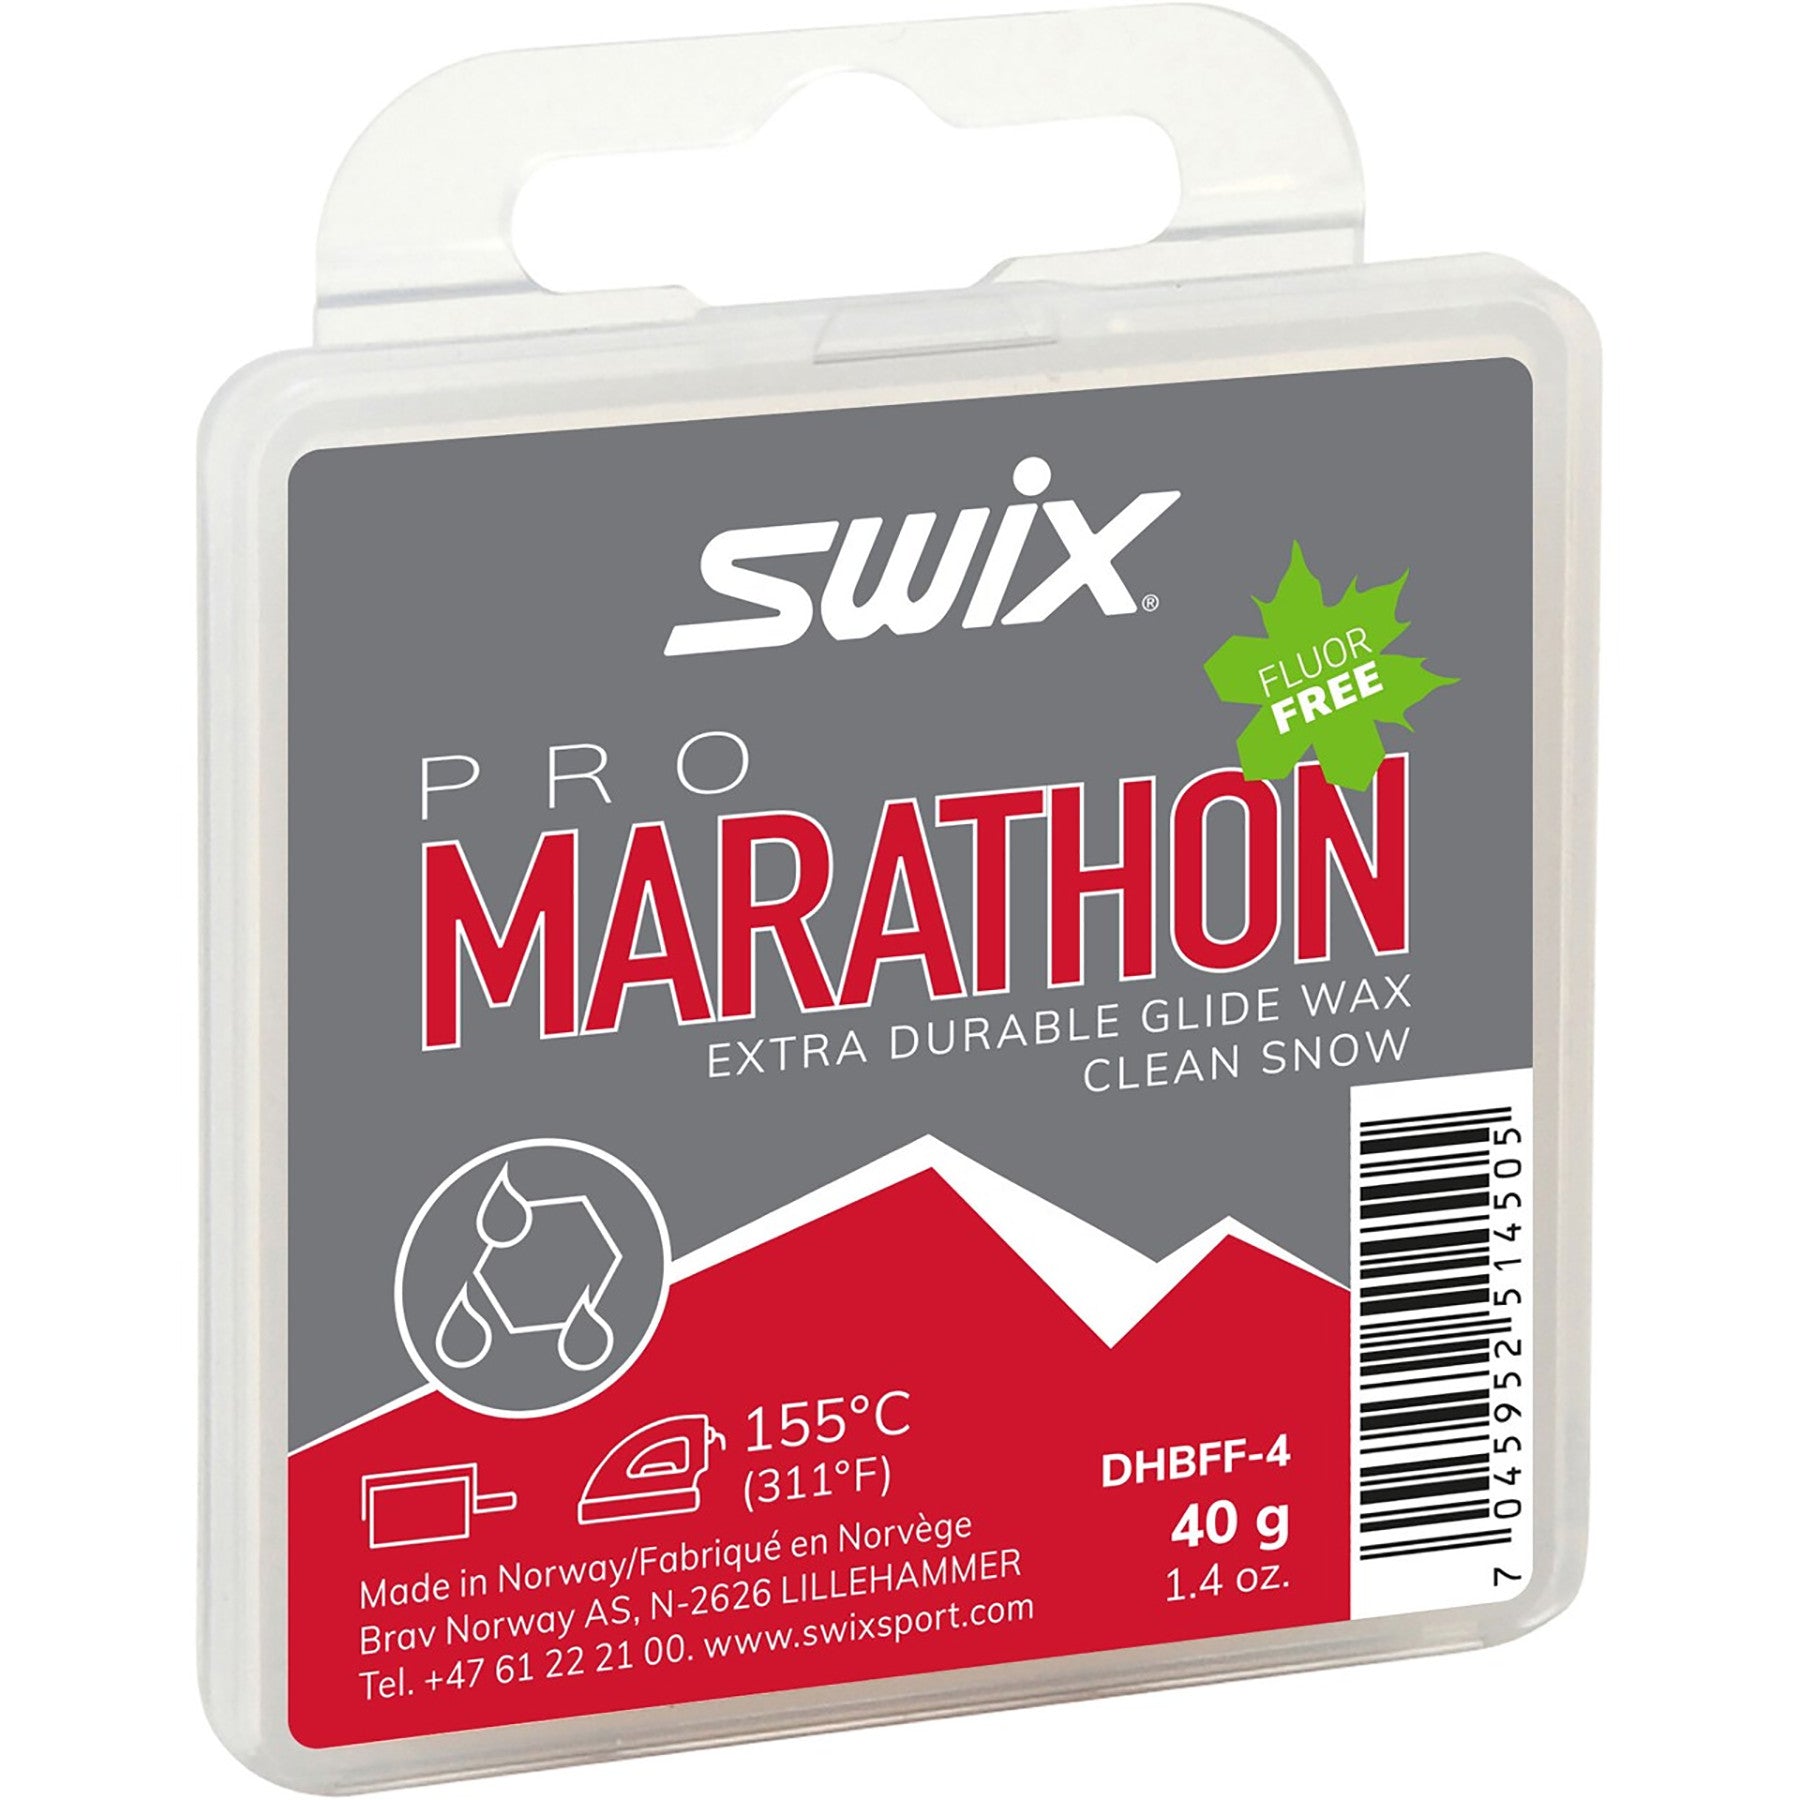 Swix Marathon Fluoro Free 40g